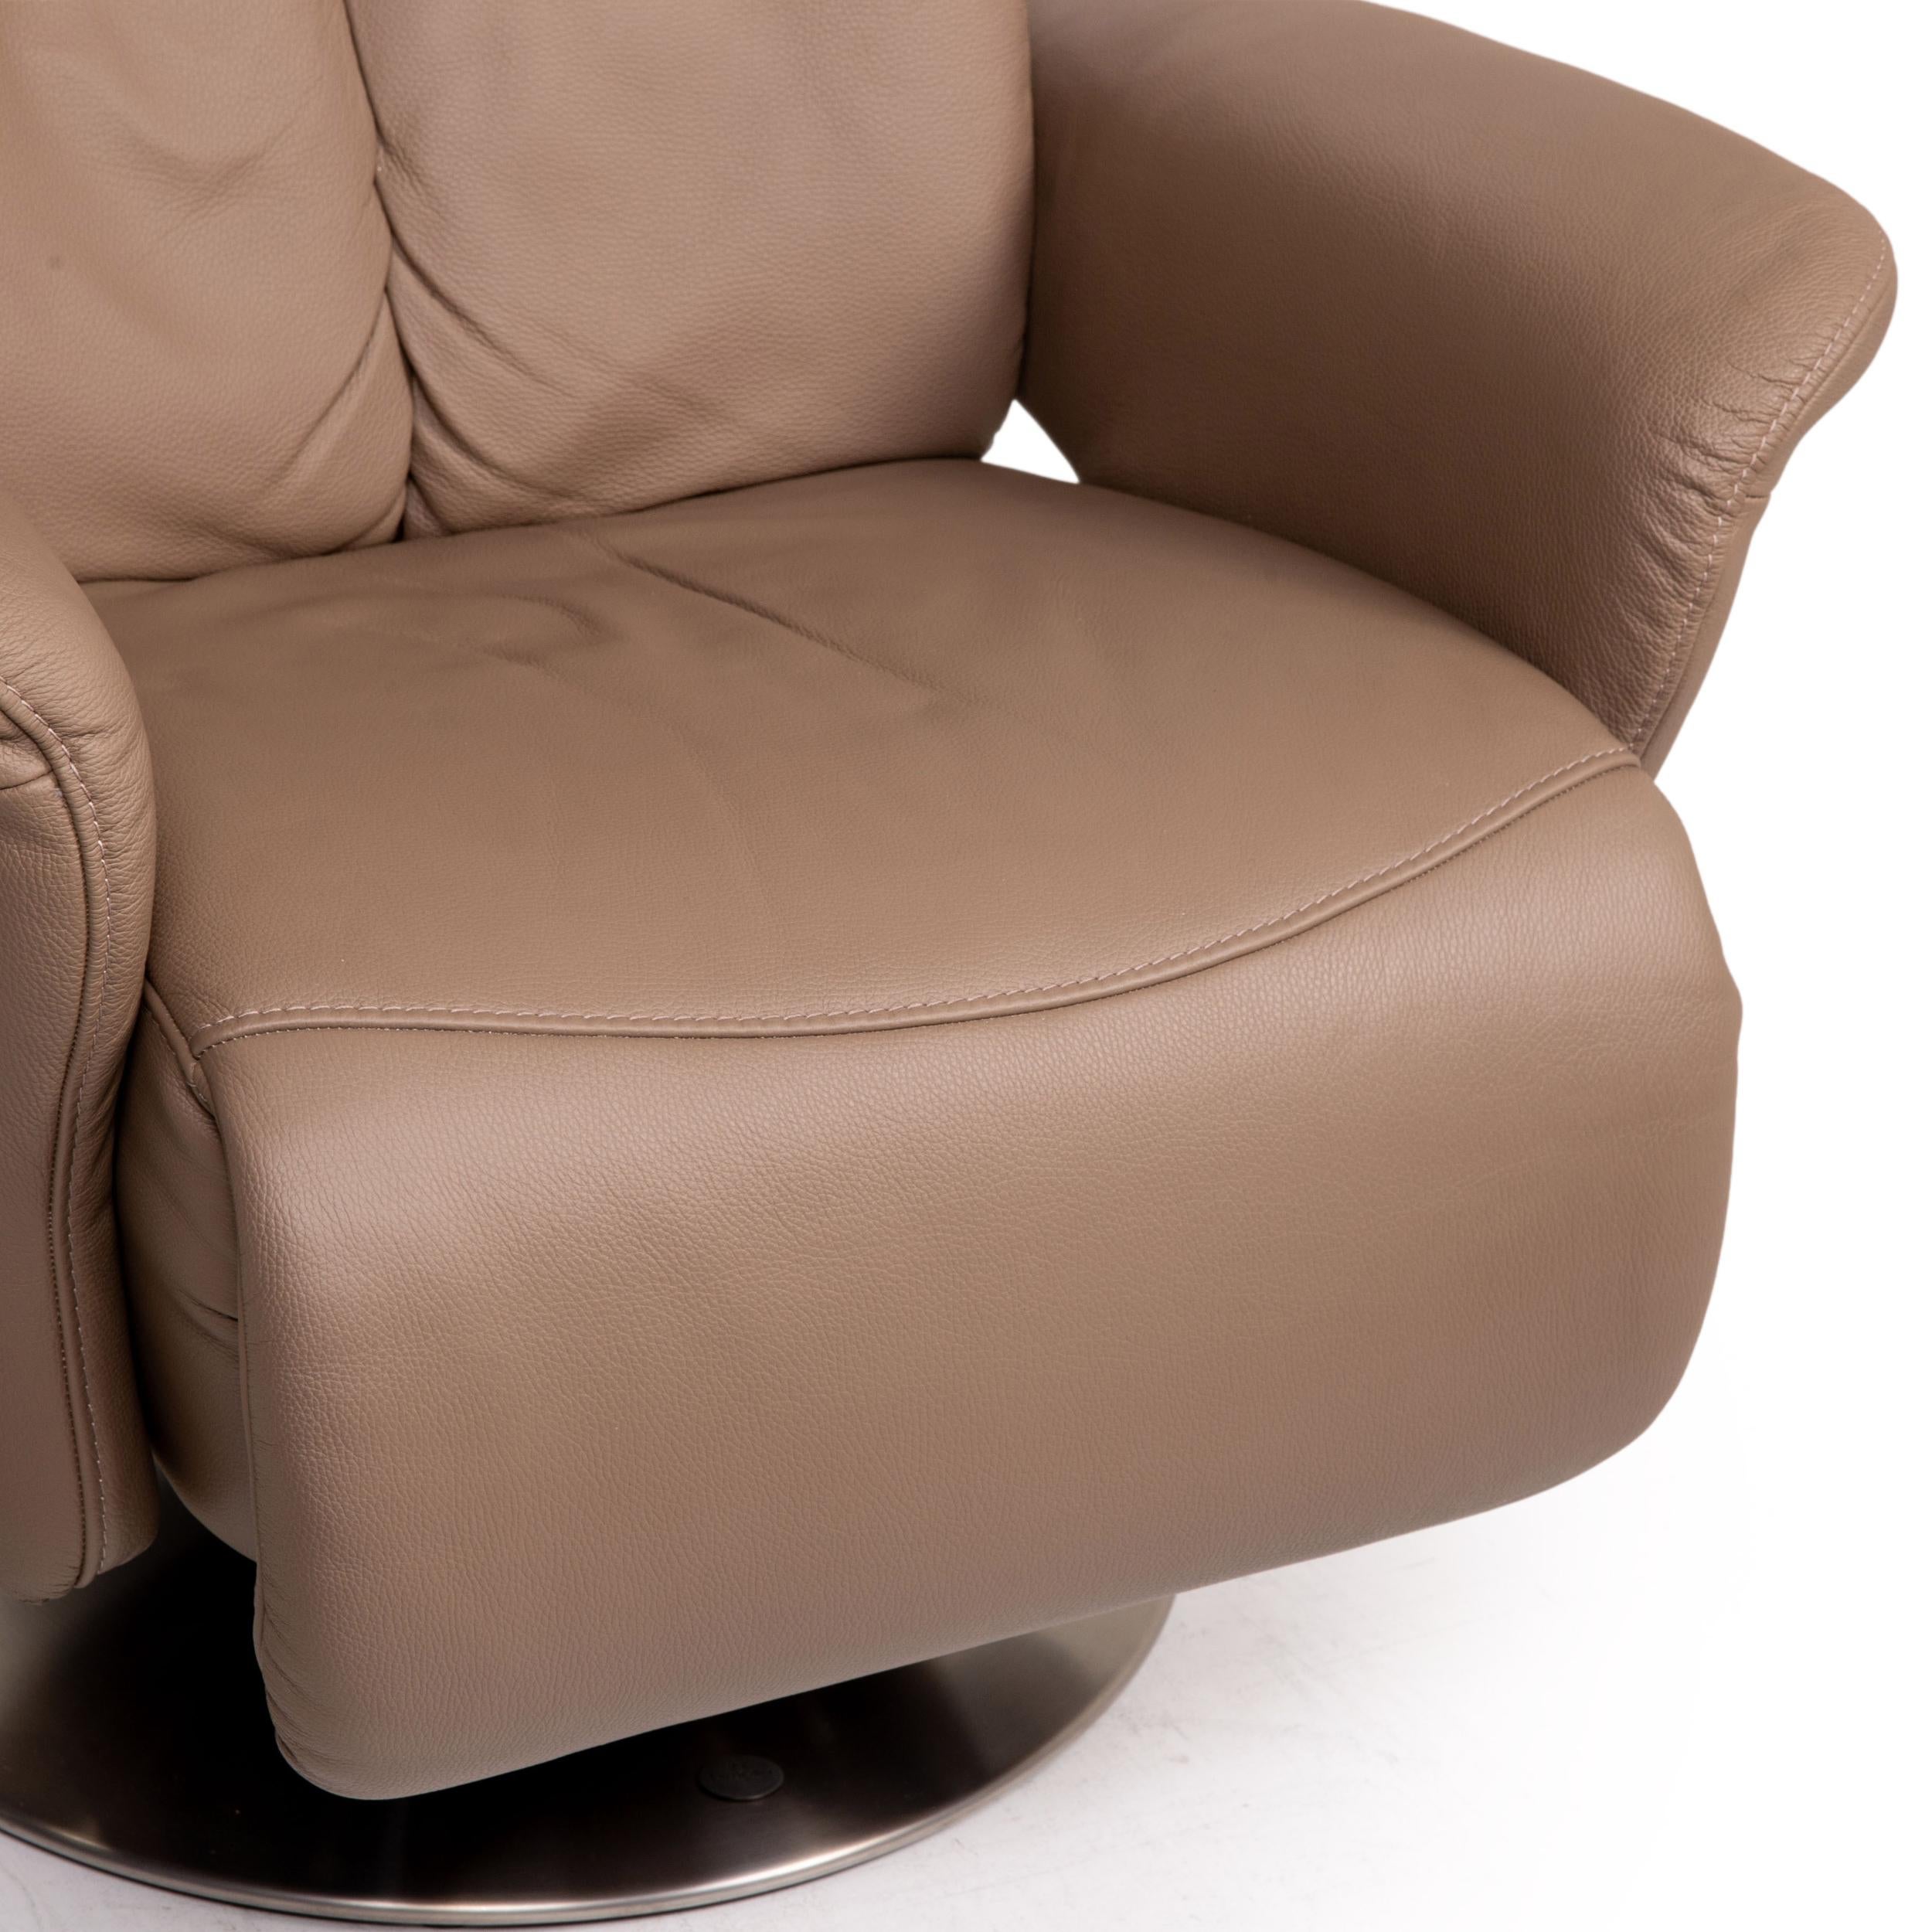 Polish Himolla 7227 Leather Armchair Brown Relaxation Function Function Relaxation For Sale